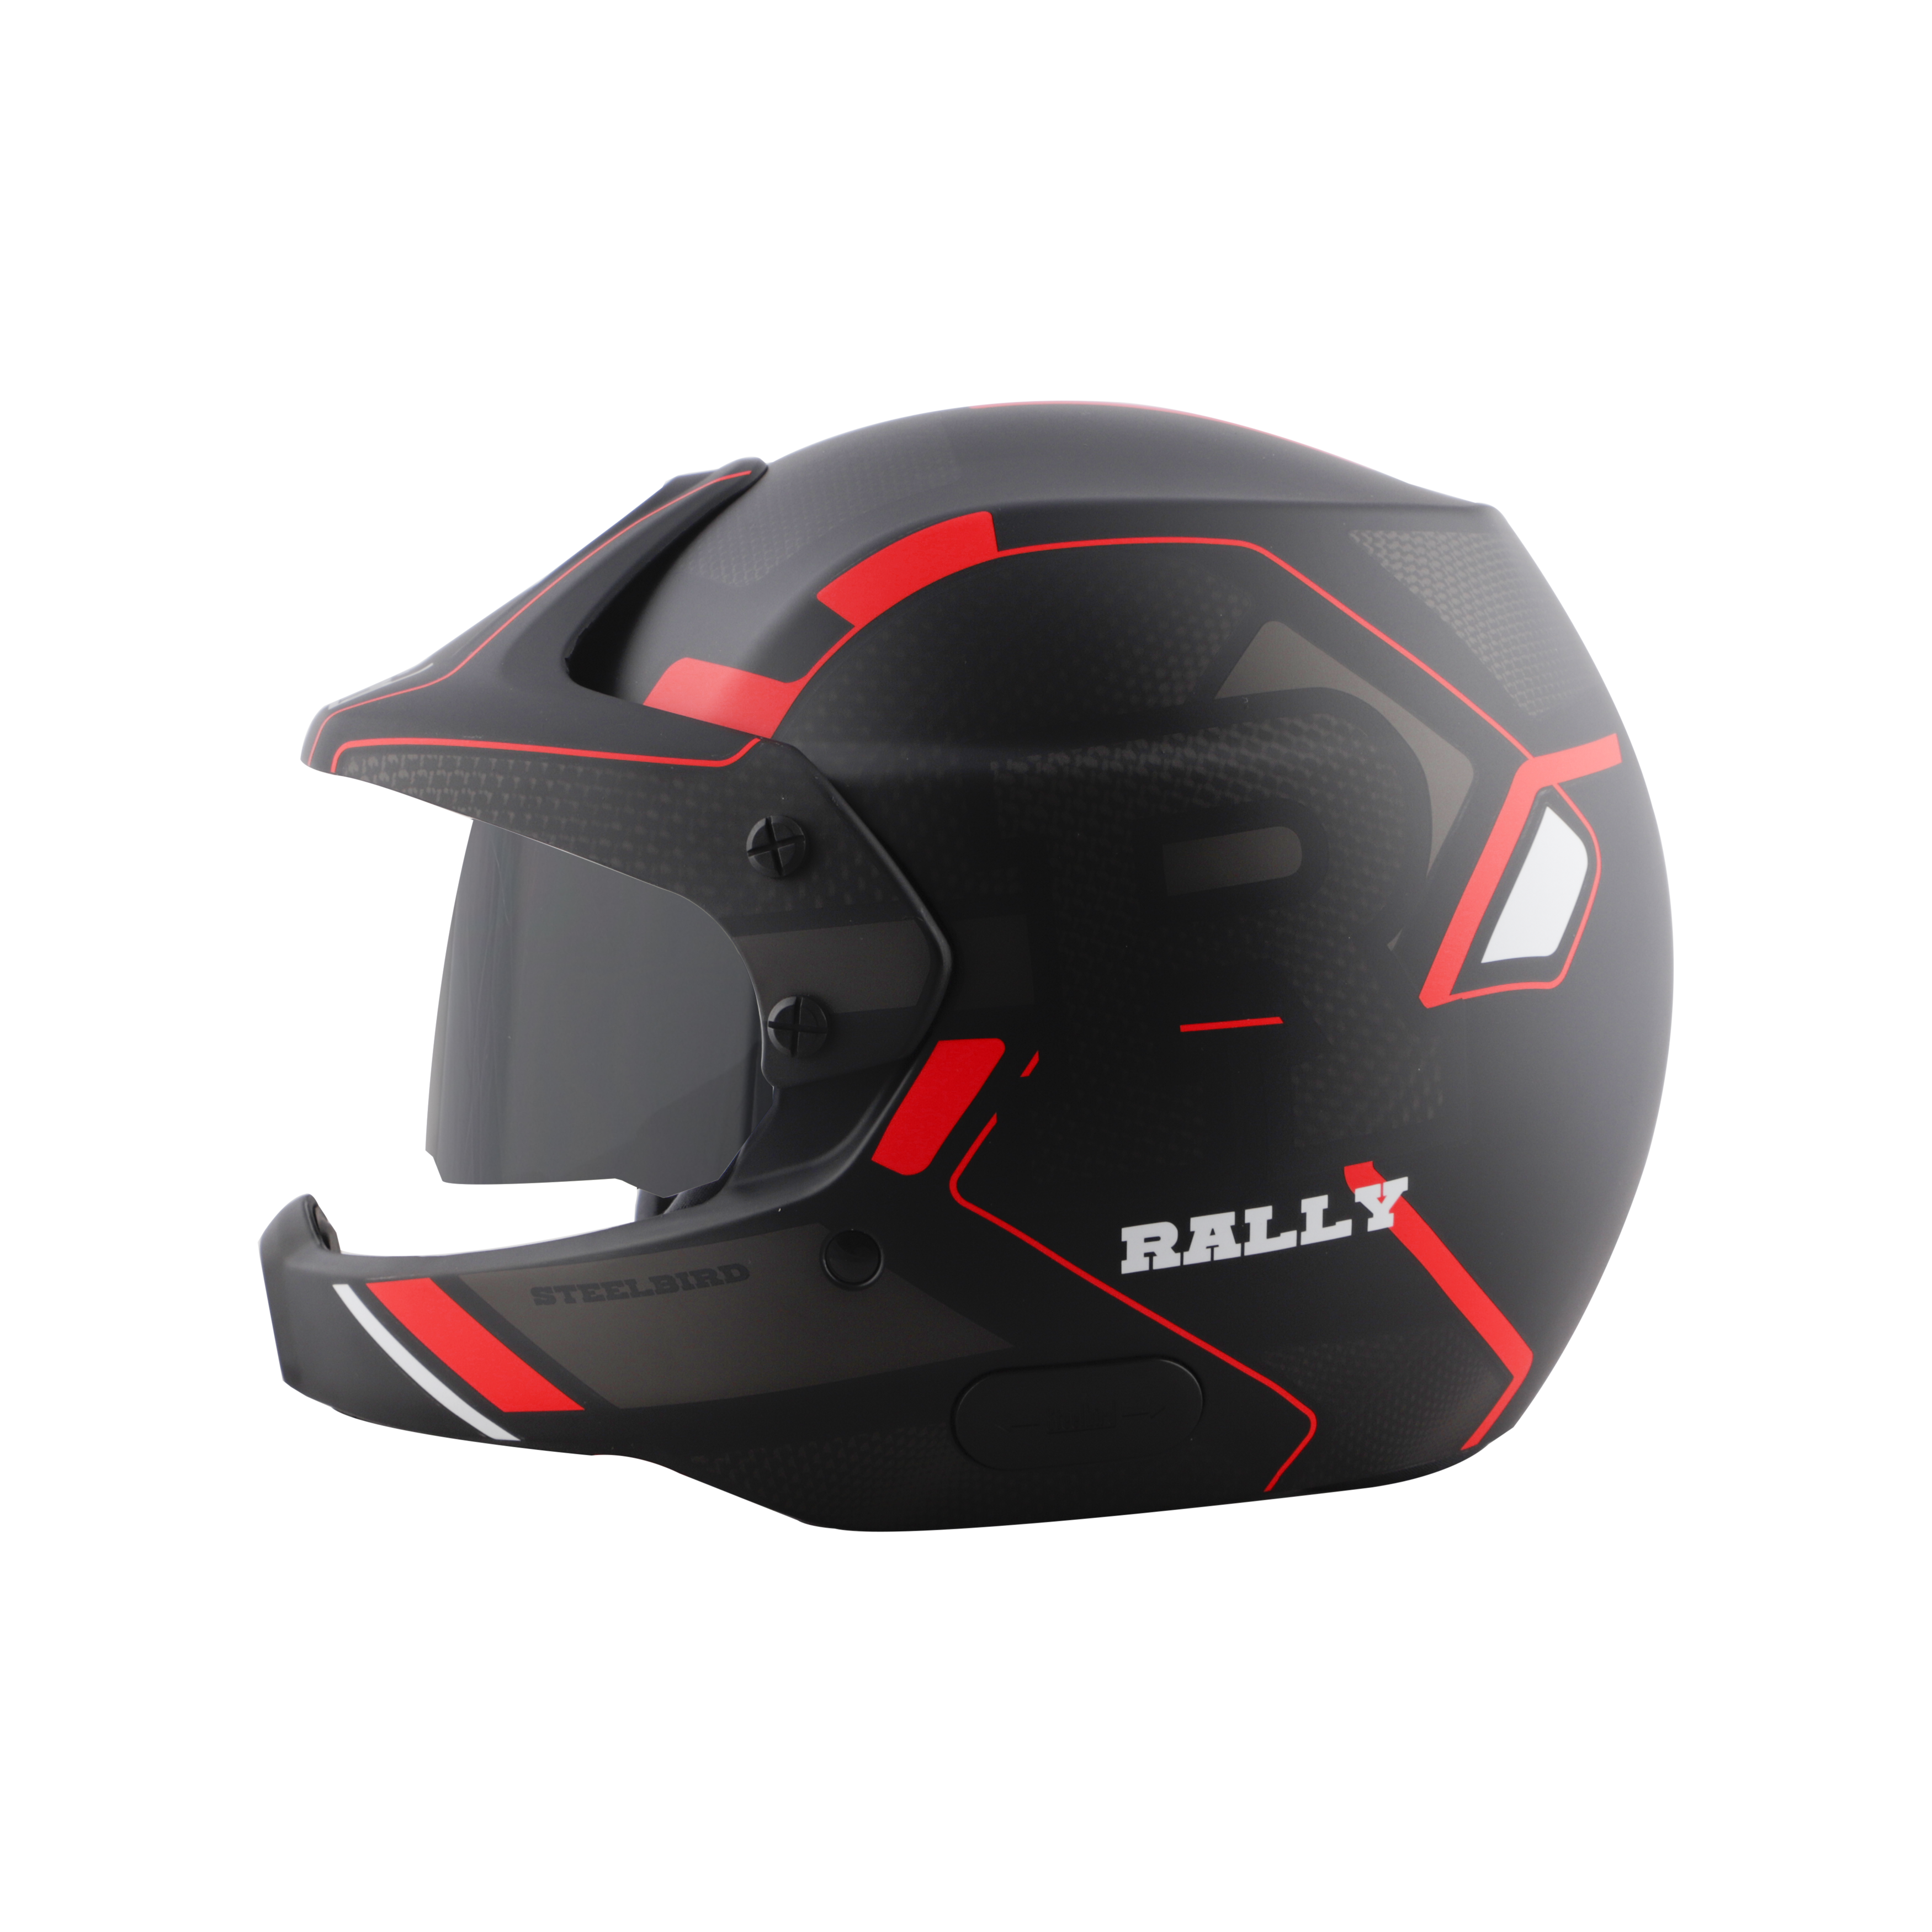 Steelbird 7Wings Rally Beat Open Face ISI Certified Off Road Helmet (Matt Black Red With Smoke Visor)